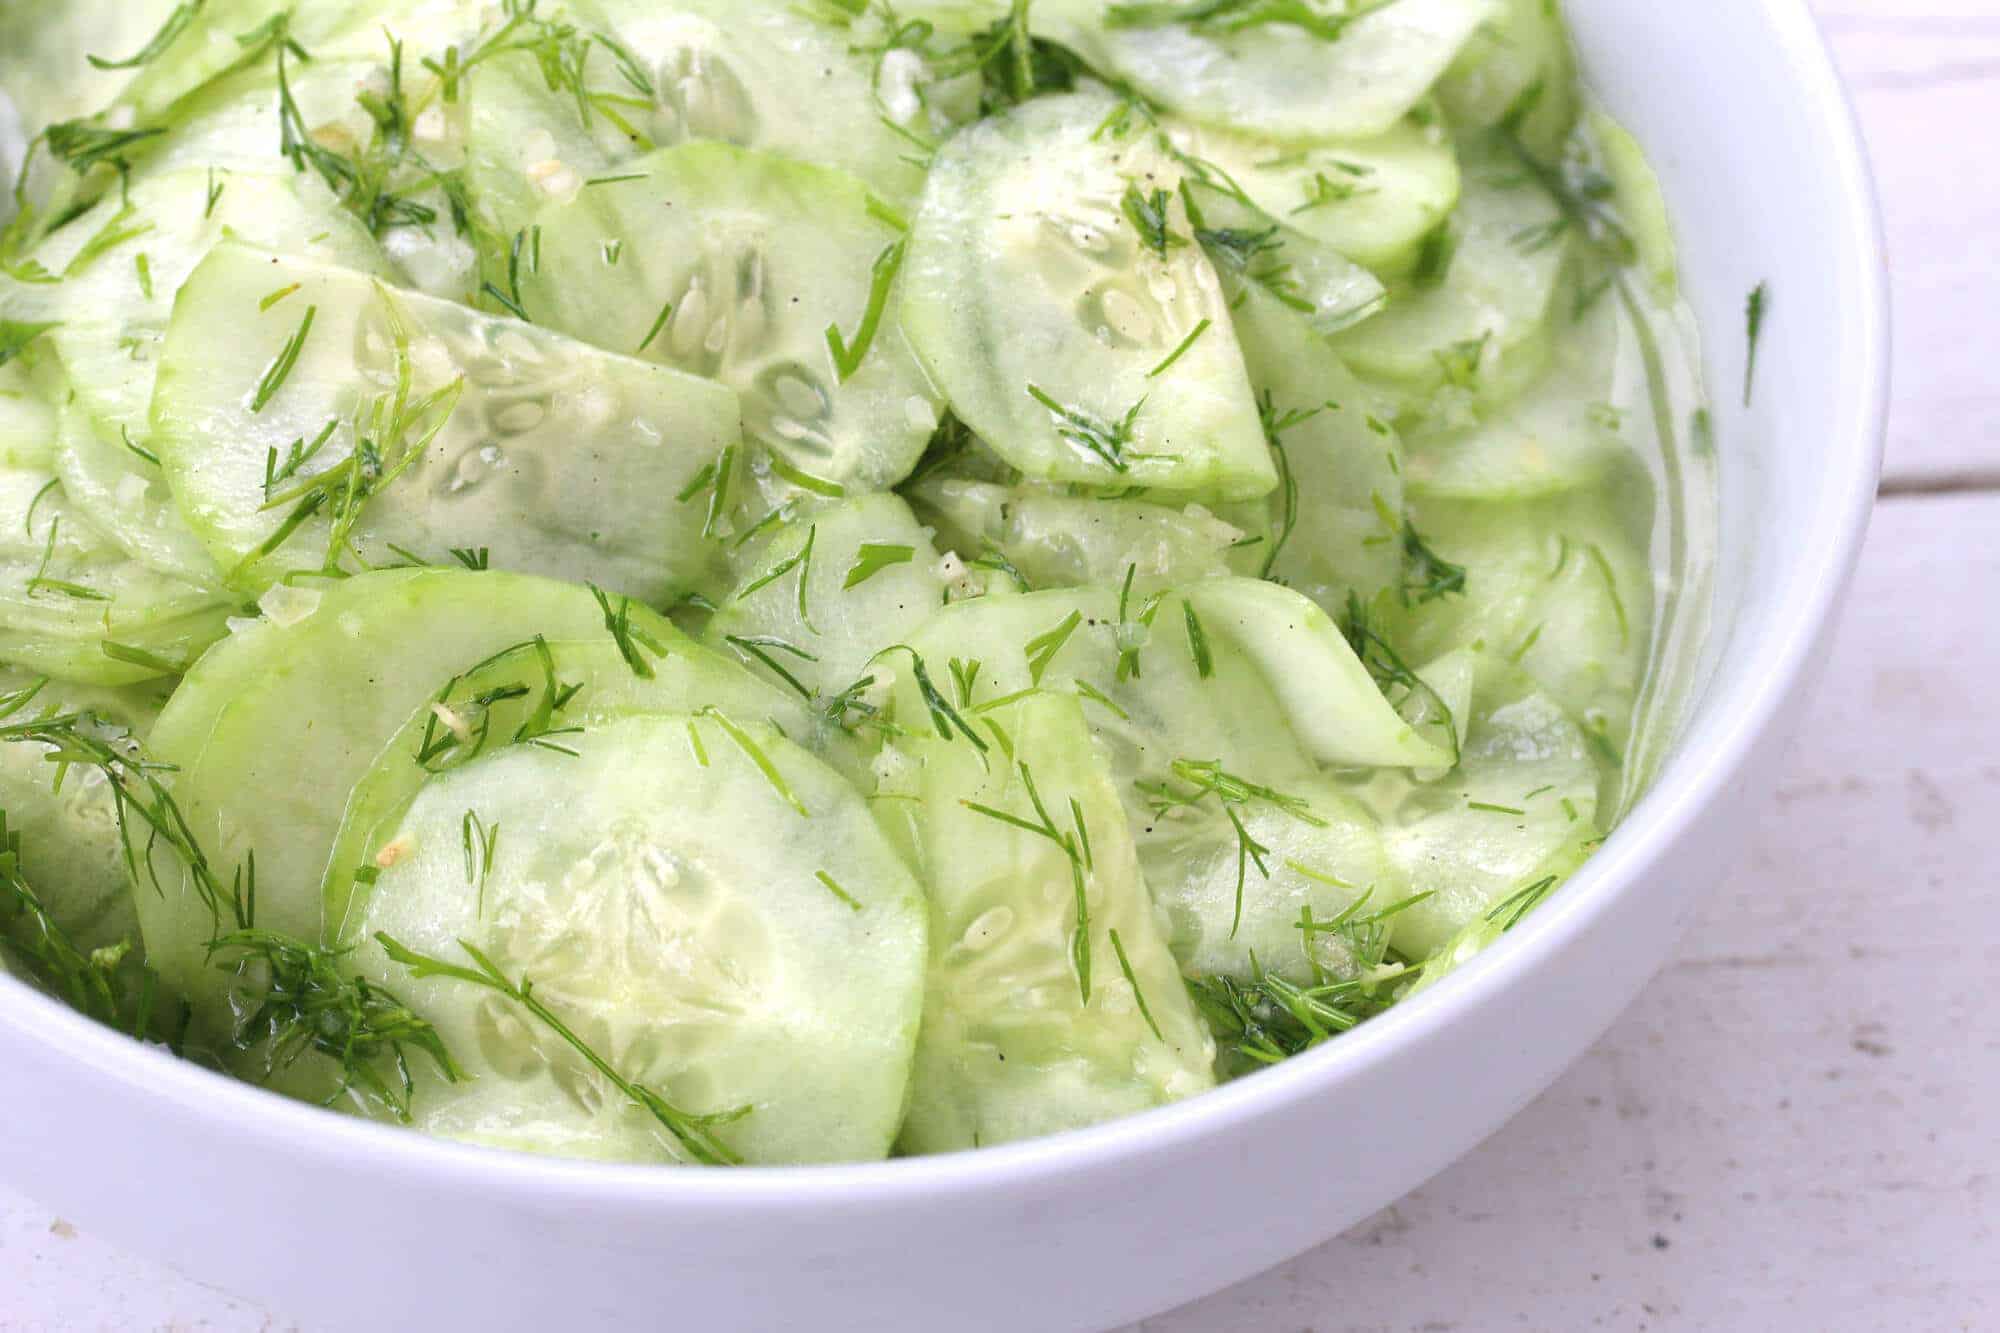 german cucumber salad recipe gurkensalat oil vinegar traditional authentic best restaurant style